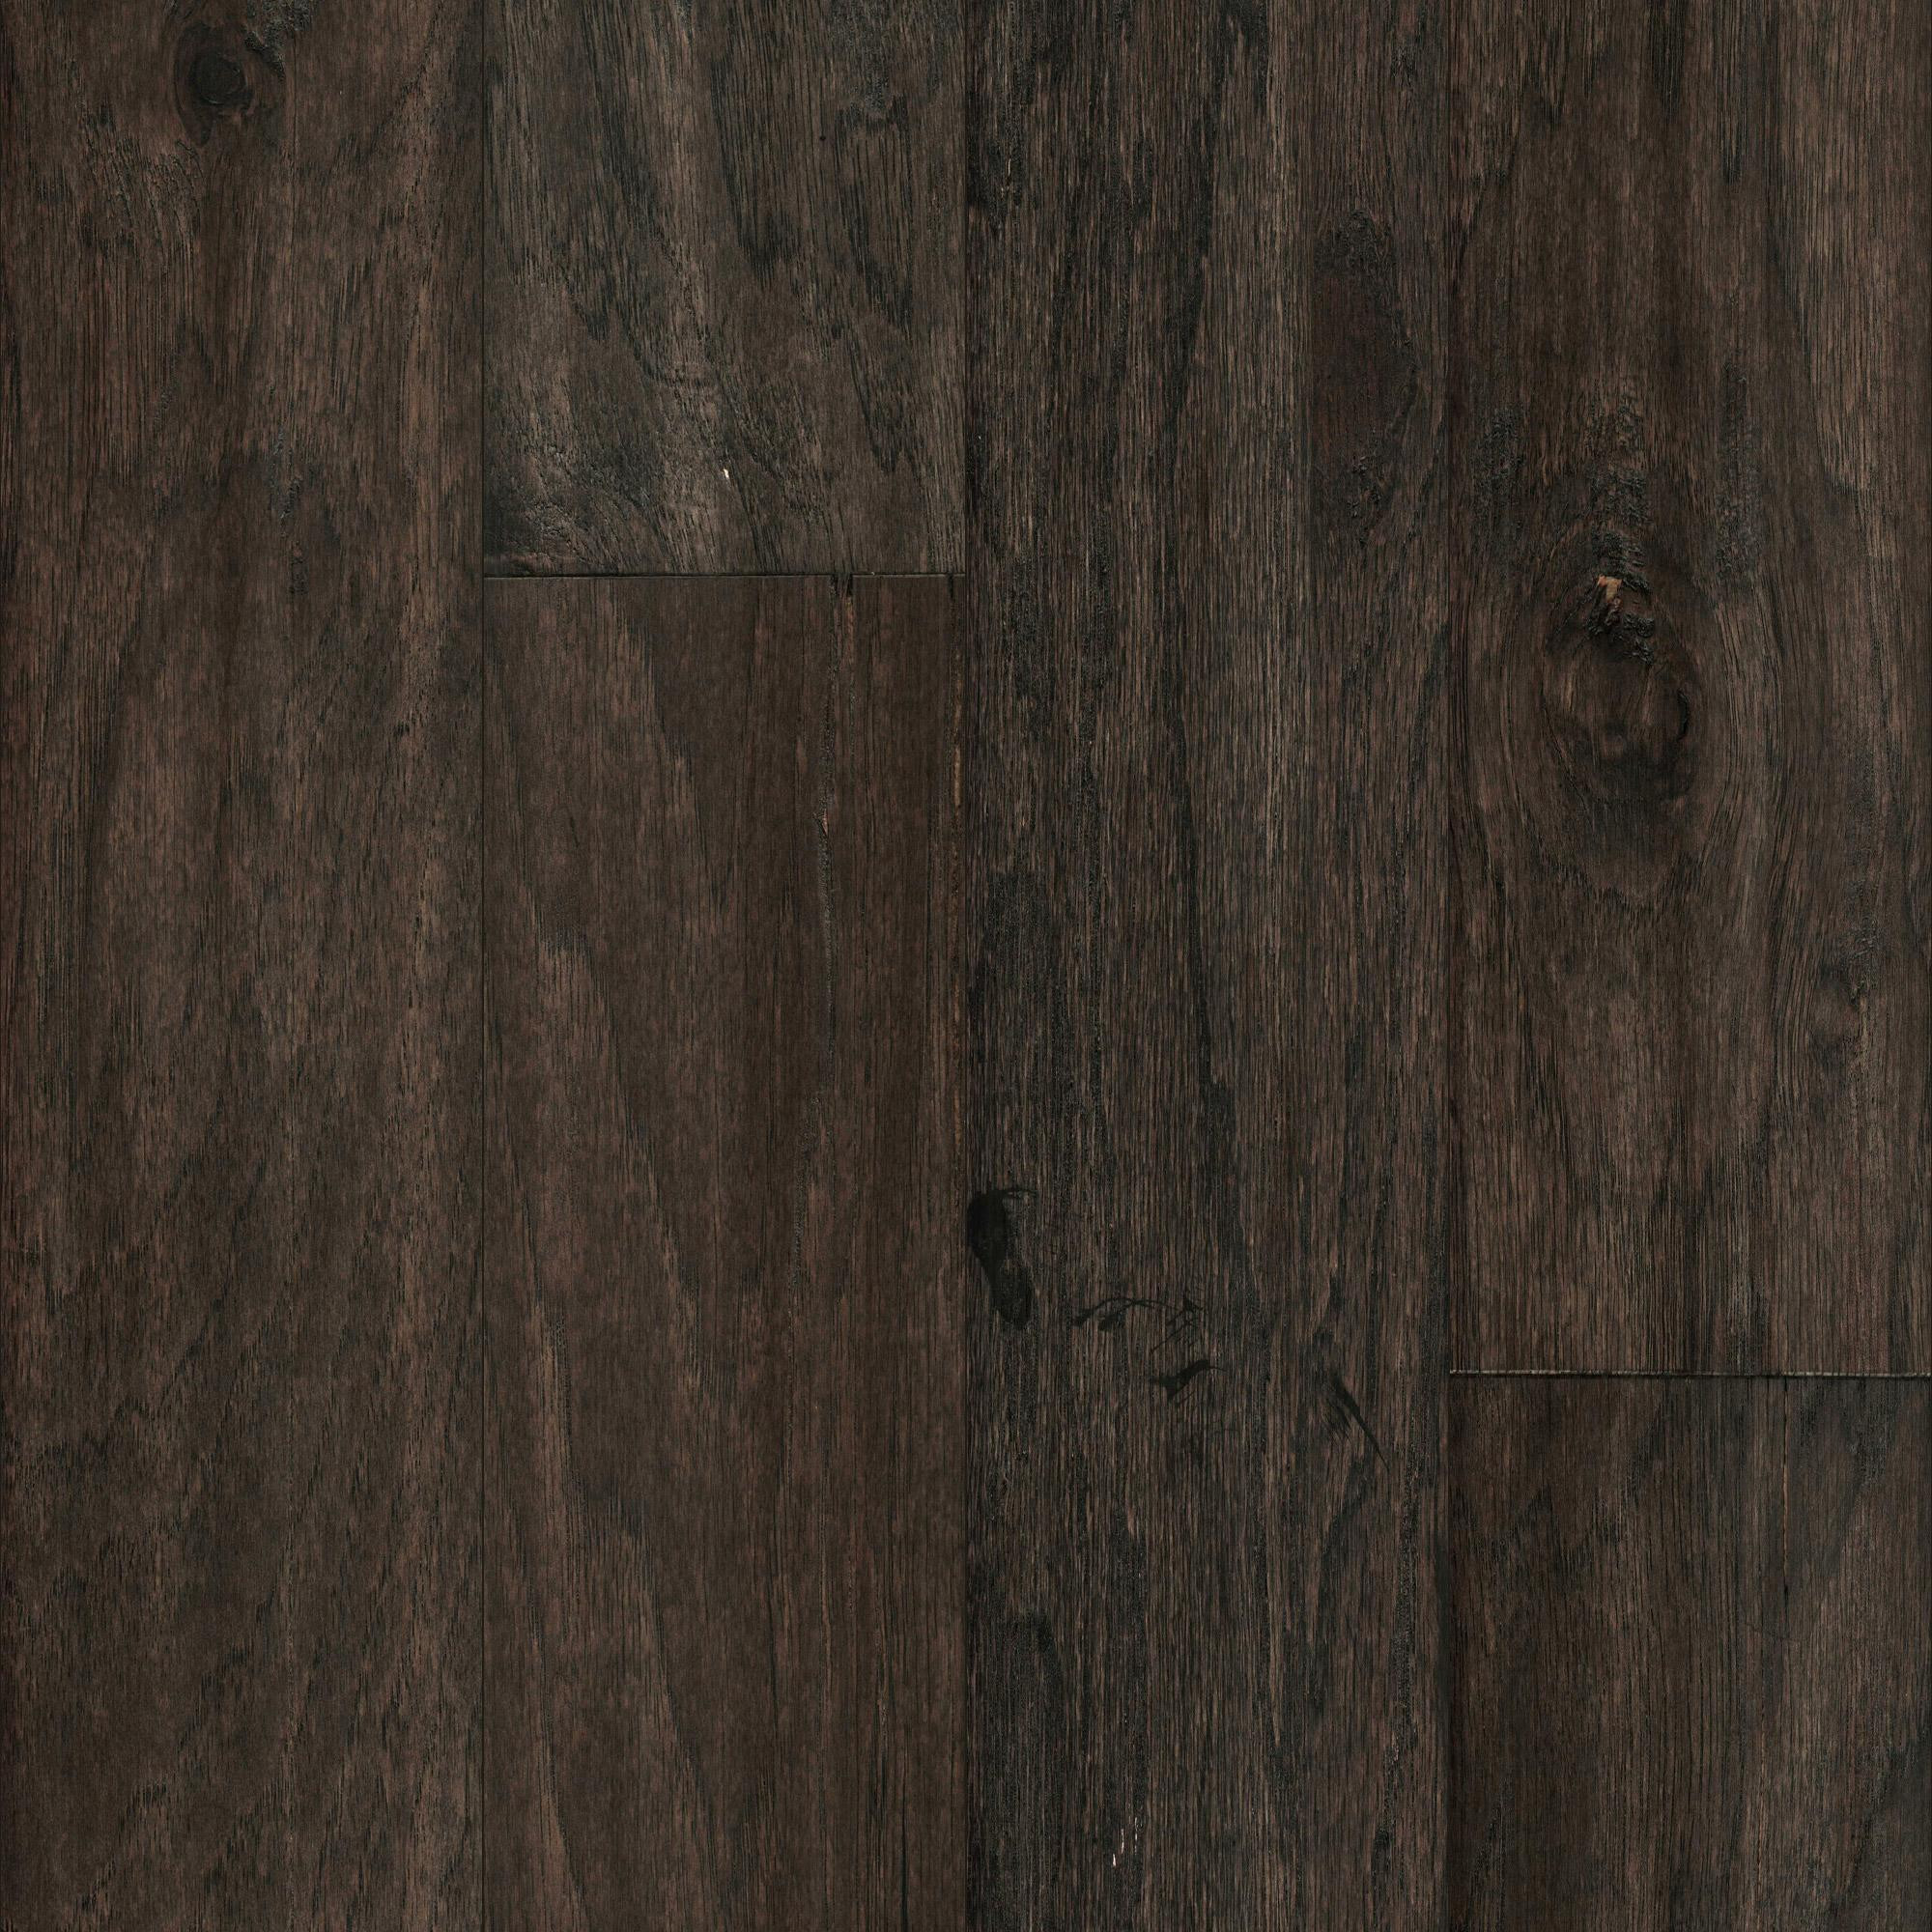 12 Trendy 3 4 Hardwood Flooring for Sale 2024 free download 3 4 hardwood flooring for sale of mullican lincolnshire sculpted hickory granite 5 engineered regarding mullican lincolnshire sculpted hickory granite 5 engineered hardwood flooring